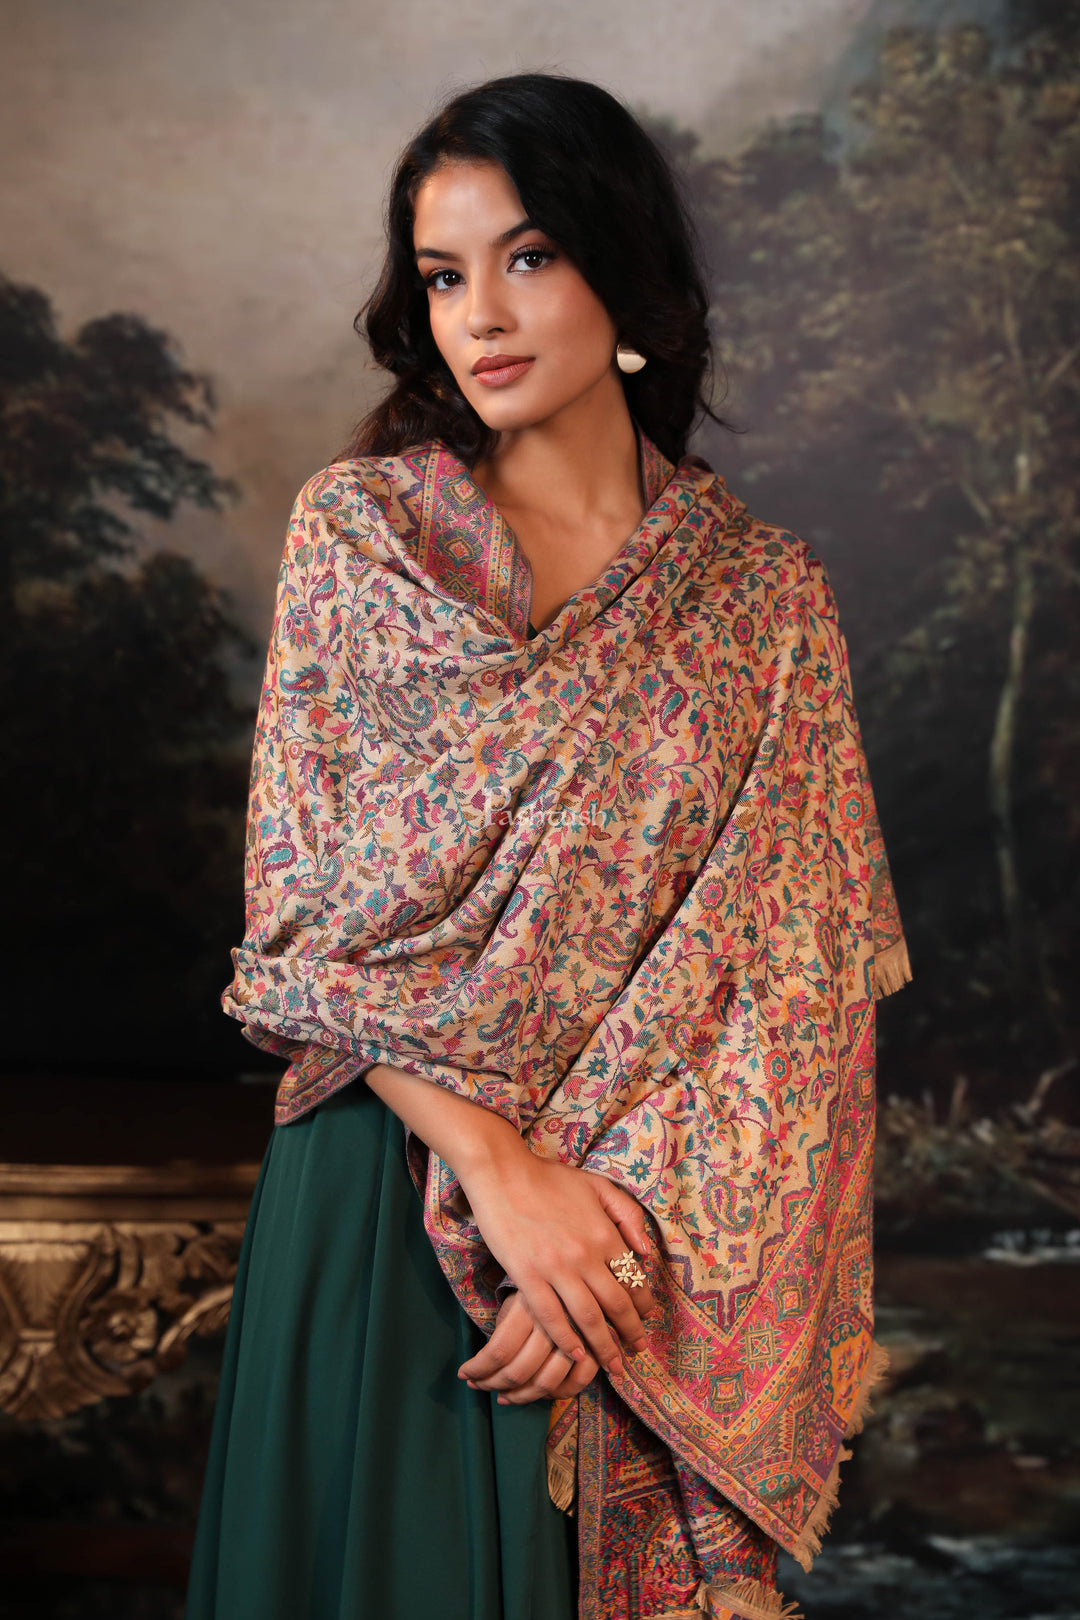 Pashtush India Womens Shawls Pashtush women faux pashmina shawl, ethnic weave design, beige